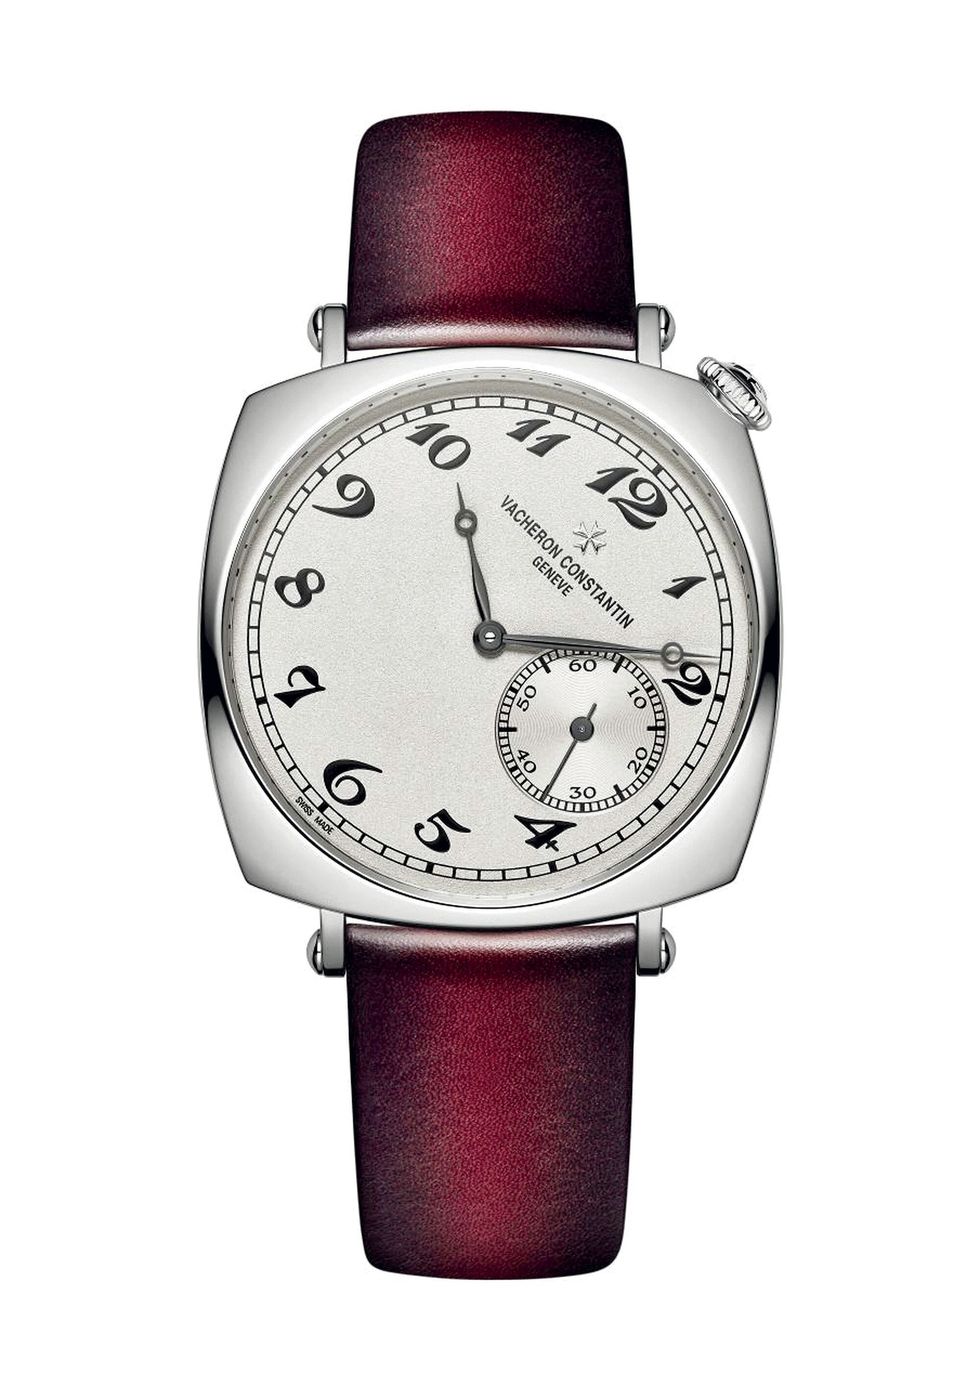 a silver wrist watch